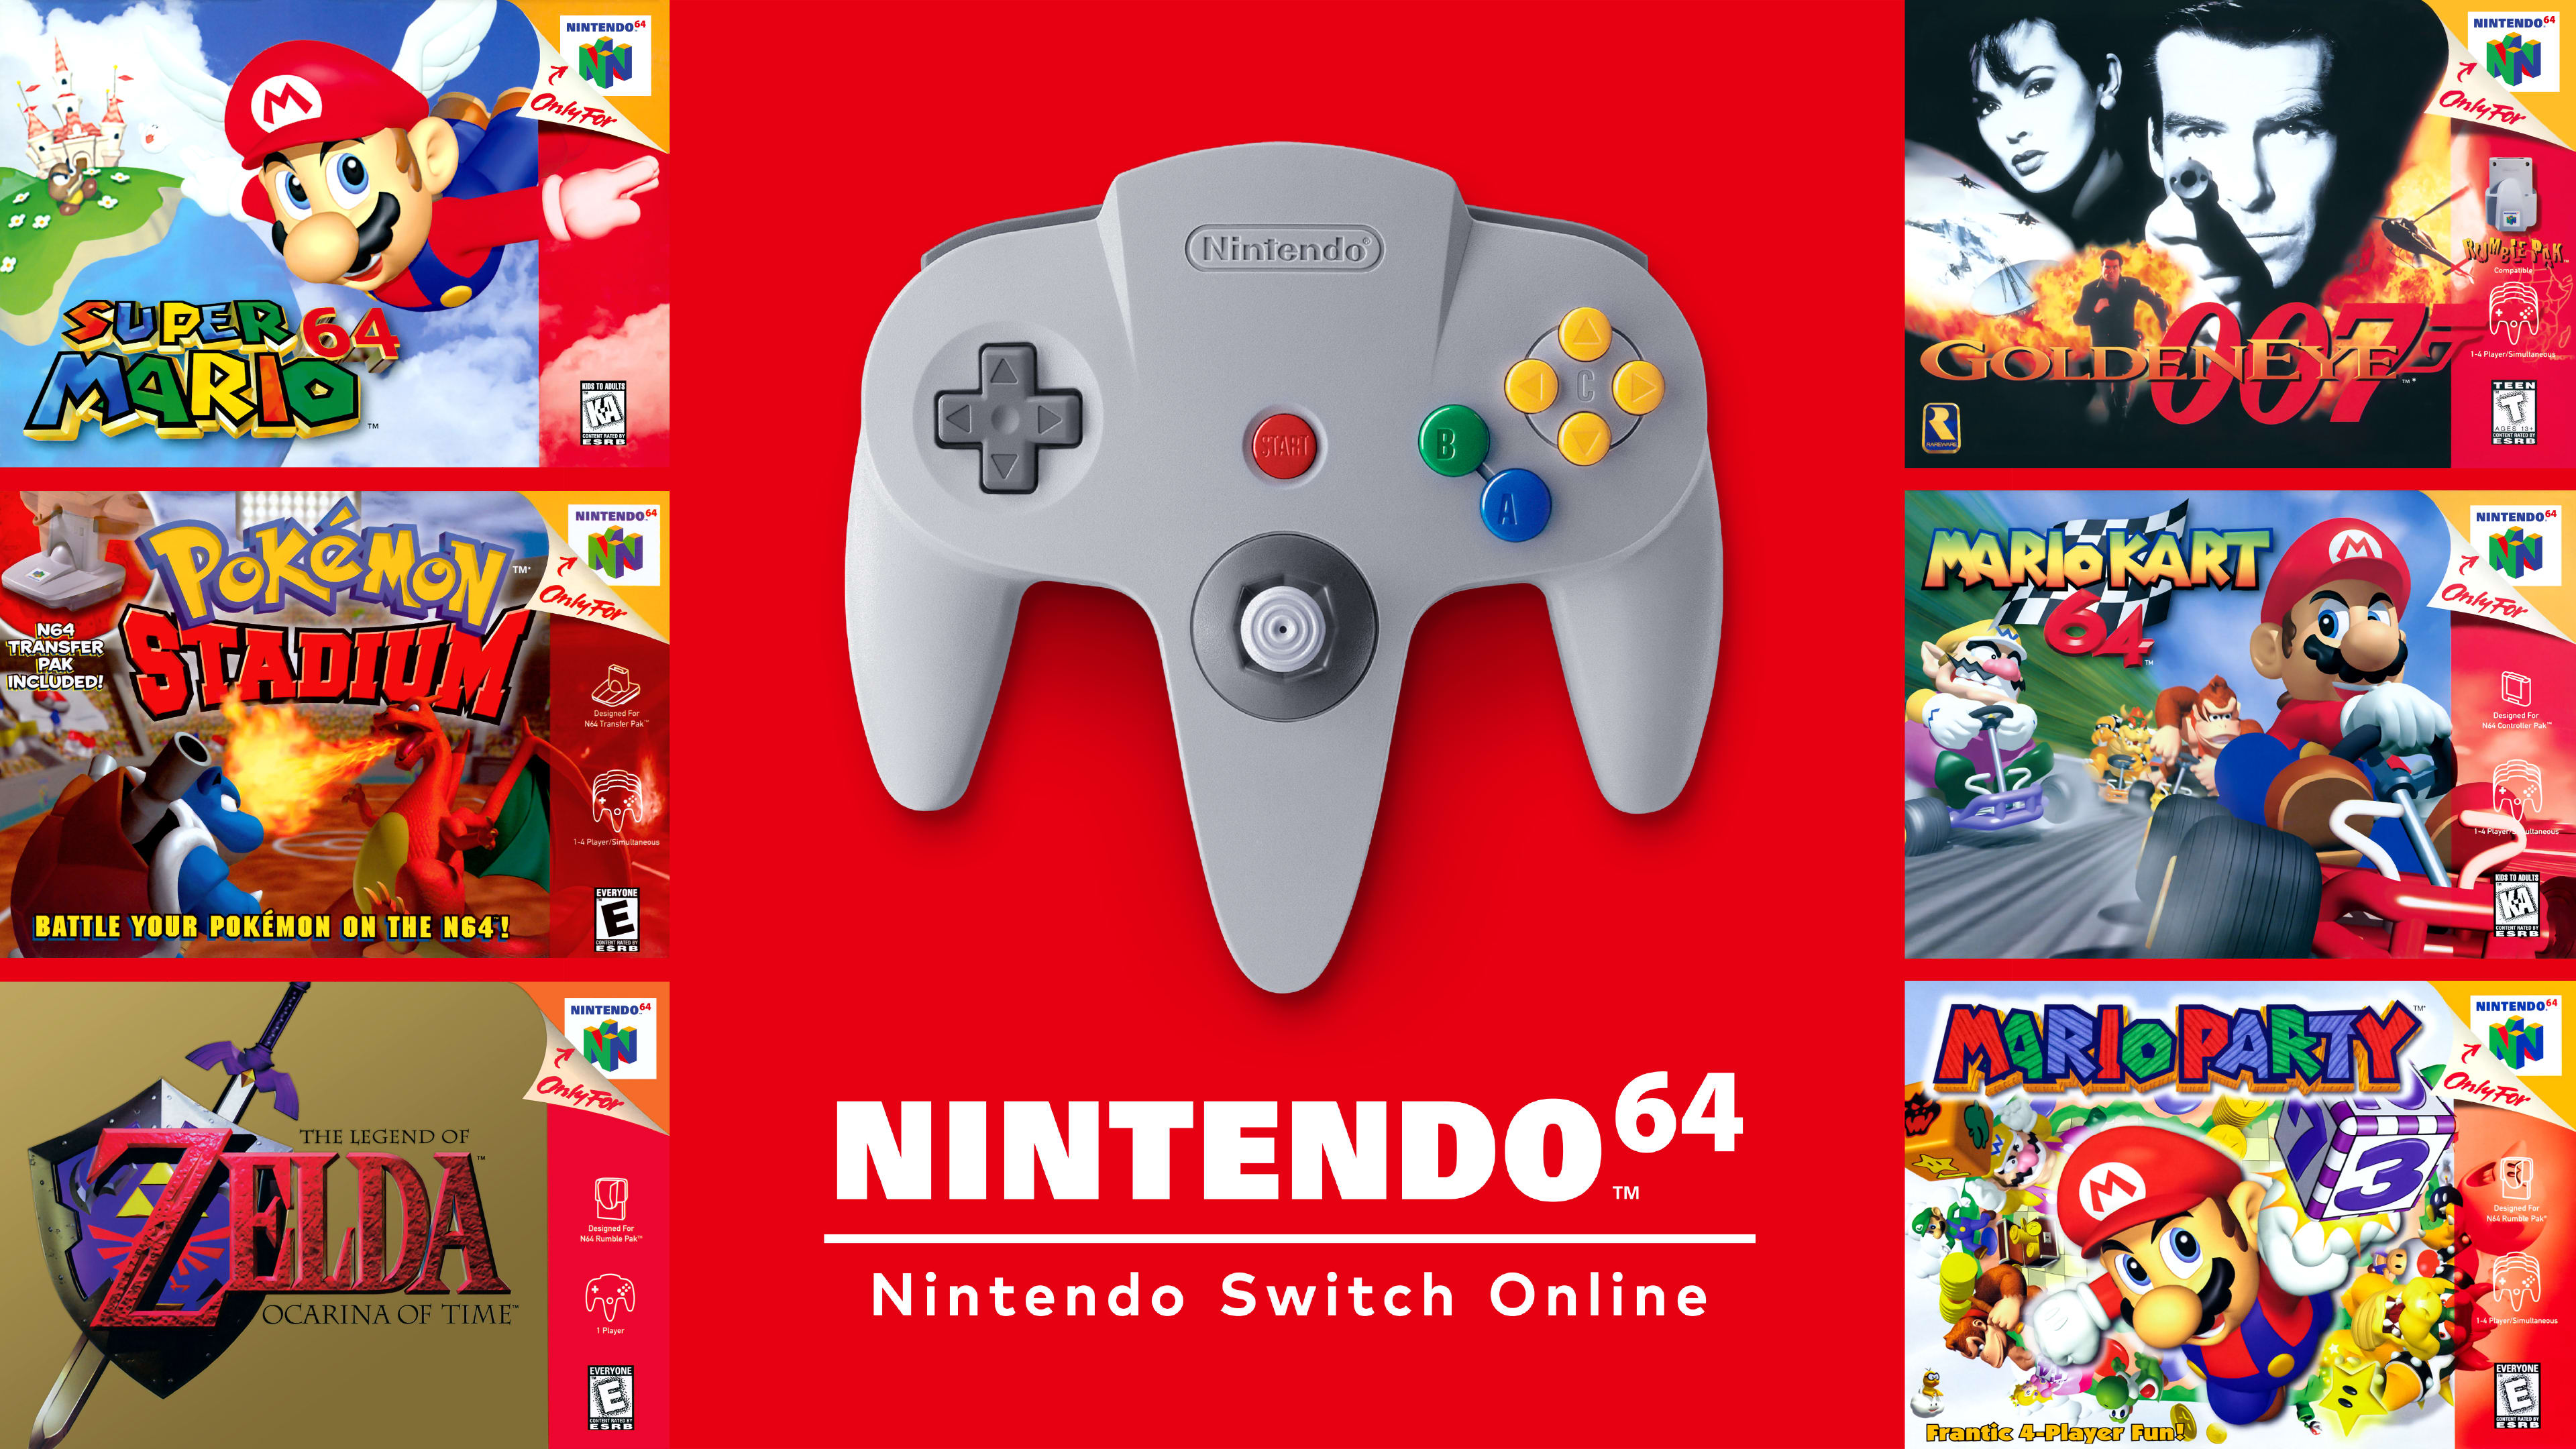 Nintendo 64 - Nintendo Switch Online image